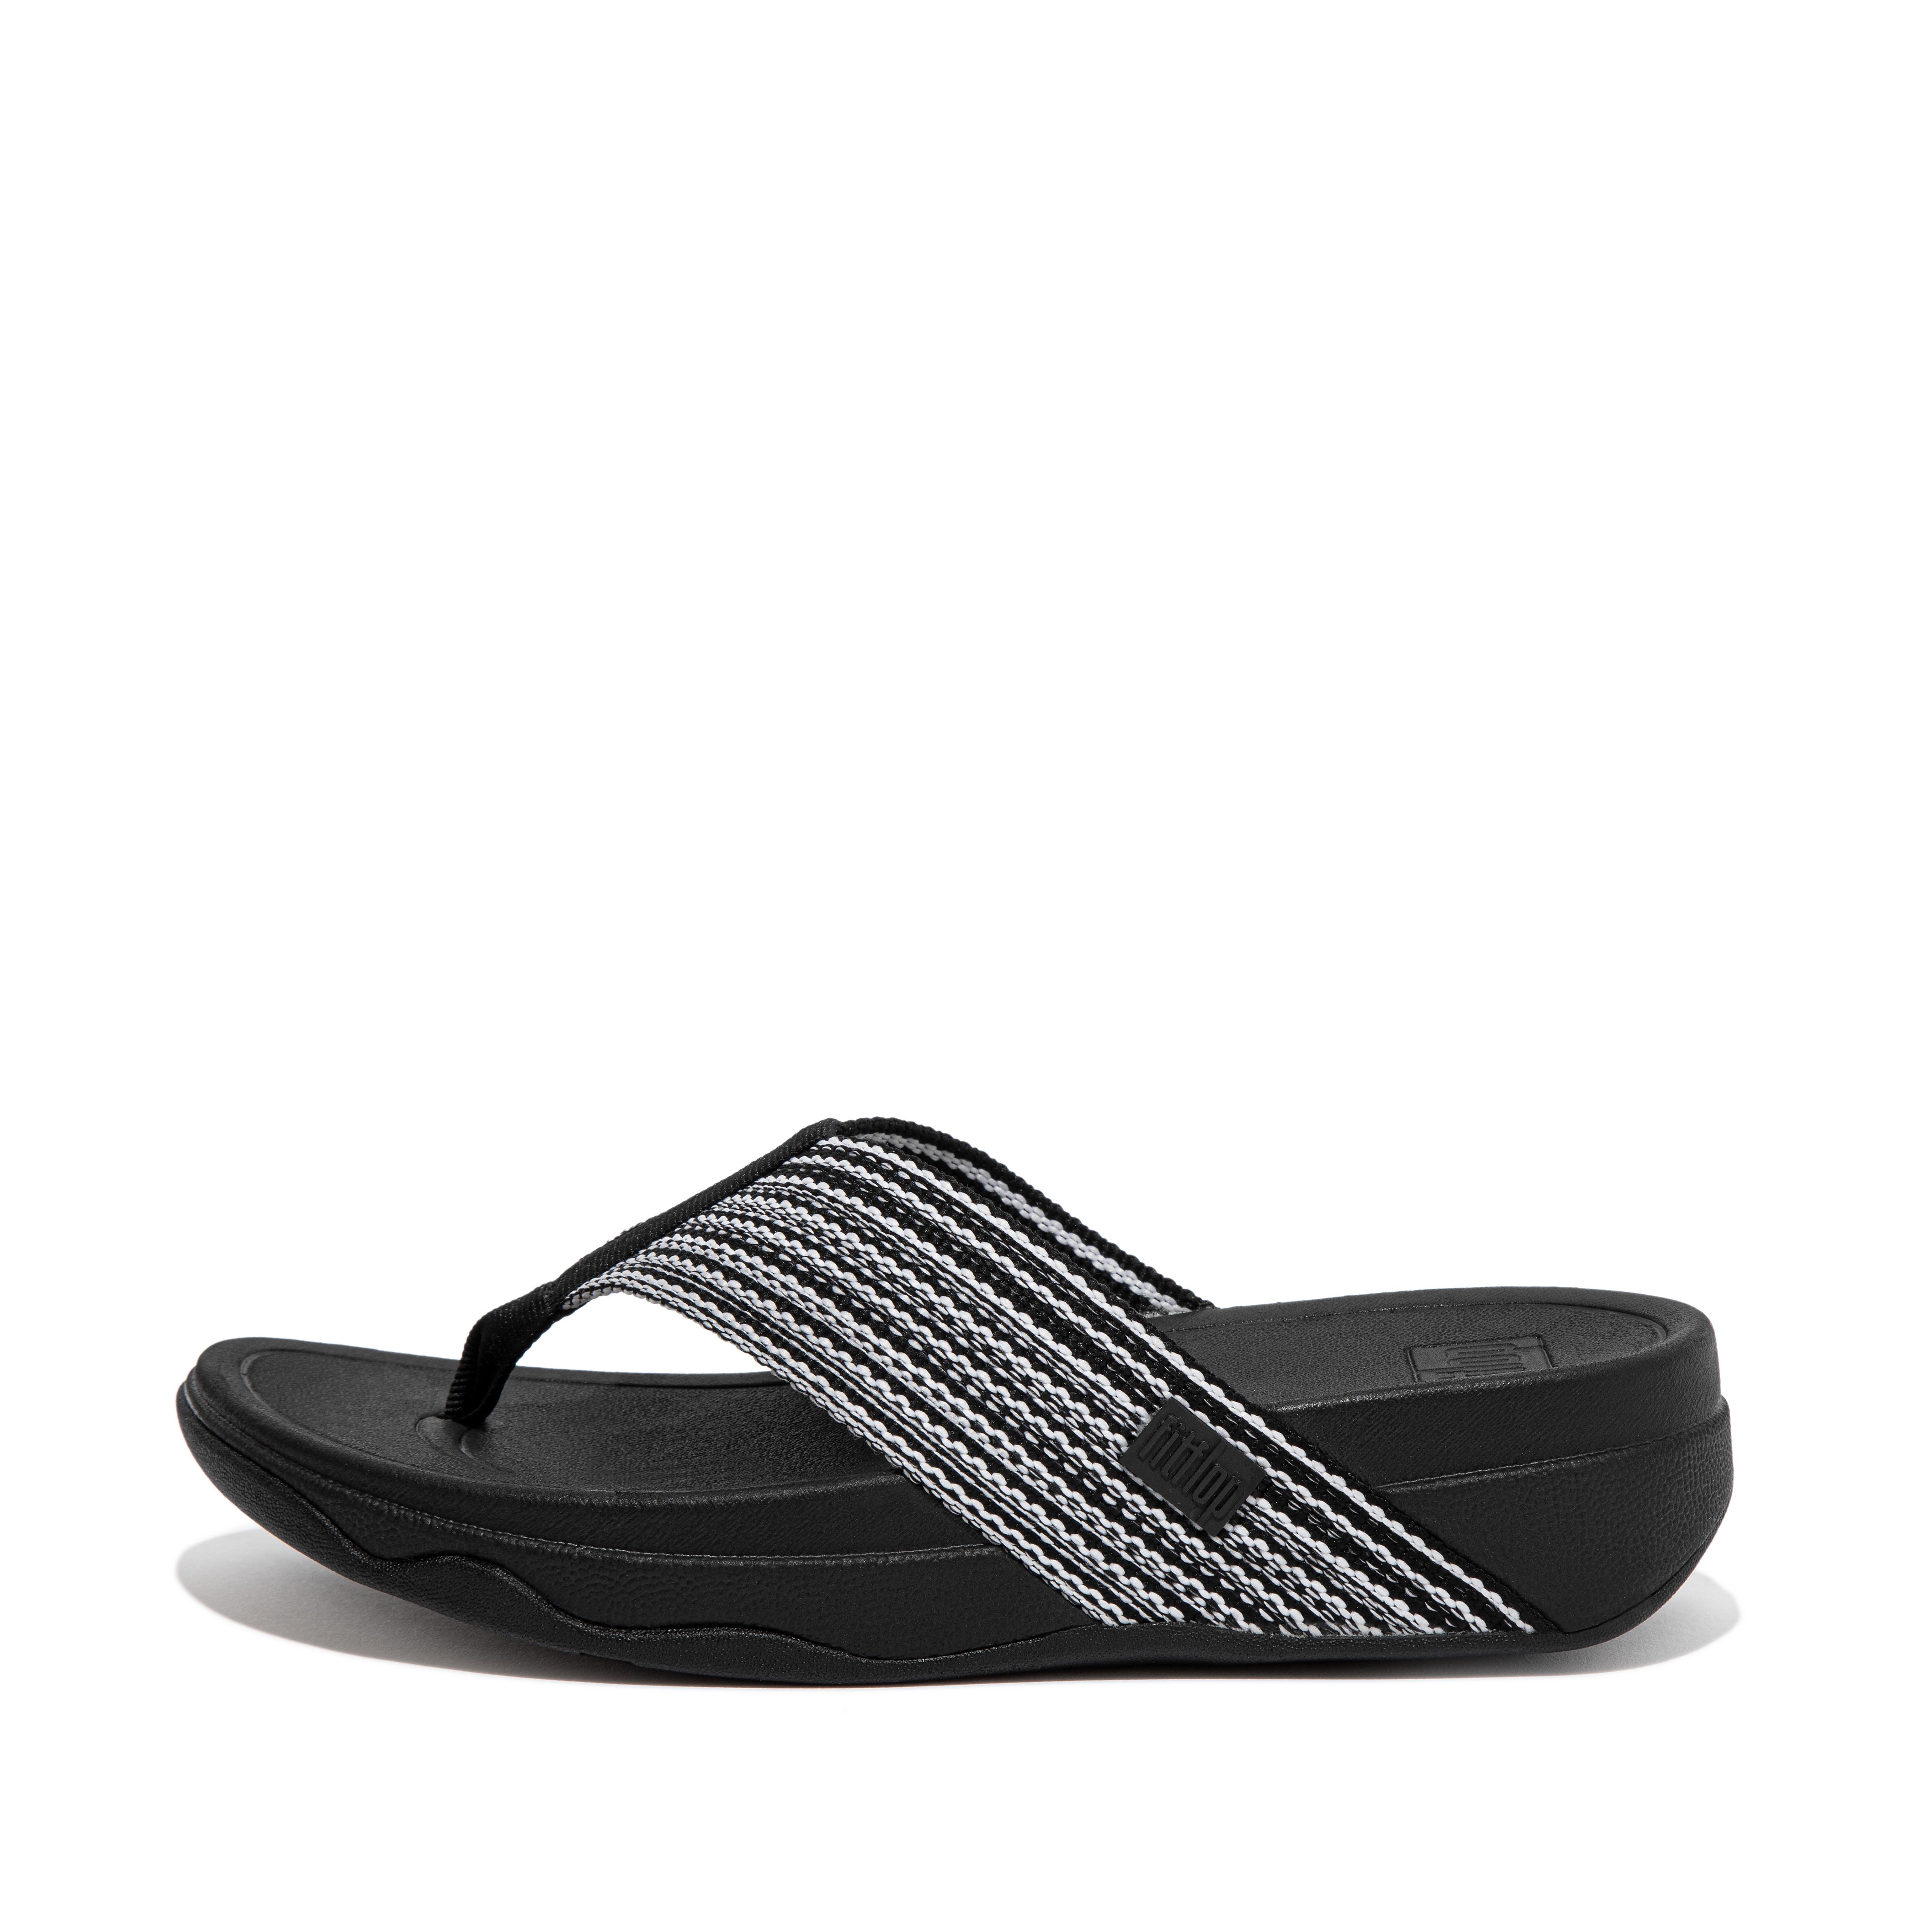 Fitflop Toe-Post Sandals